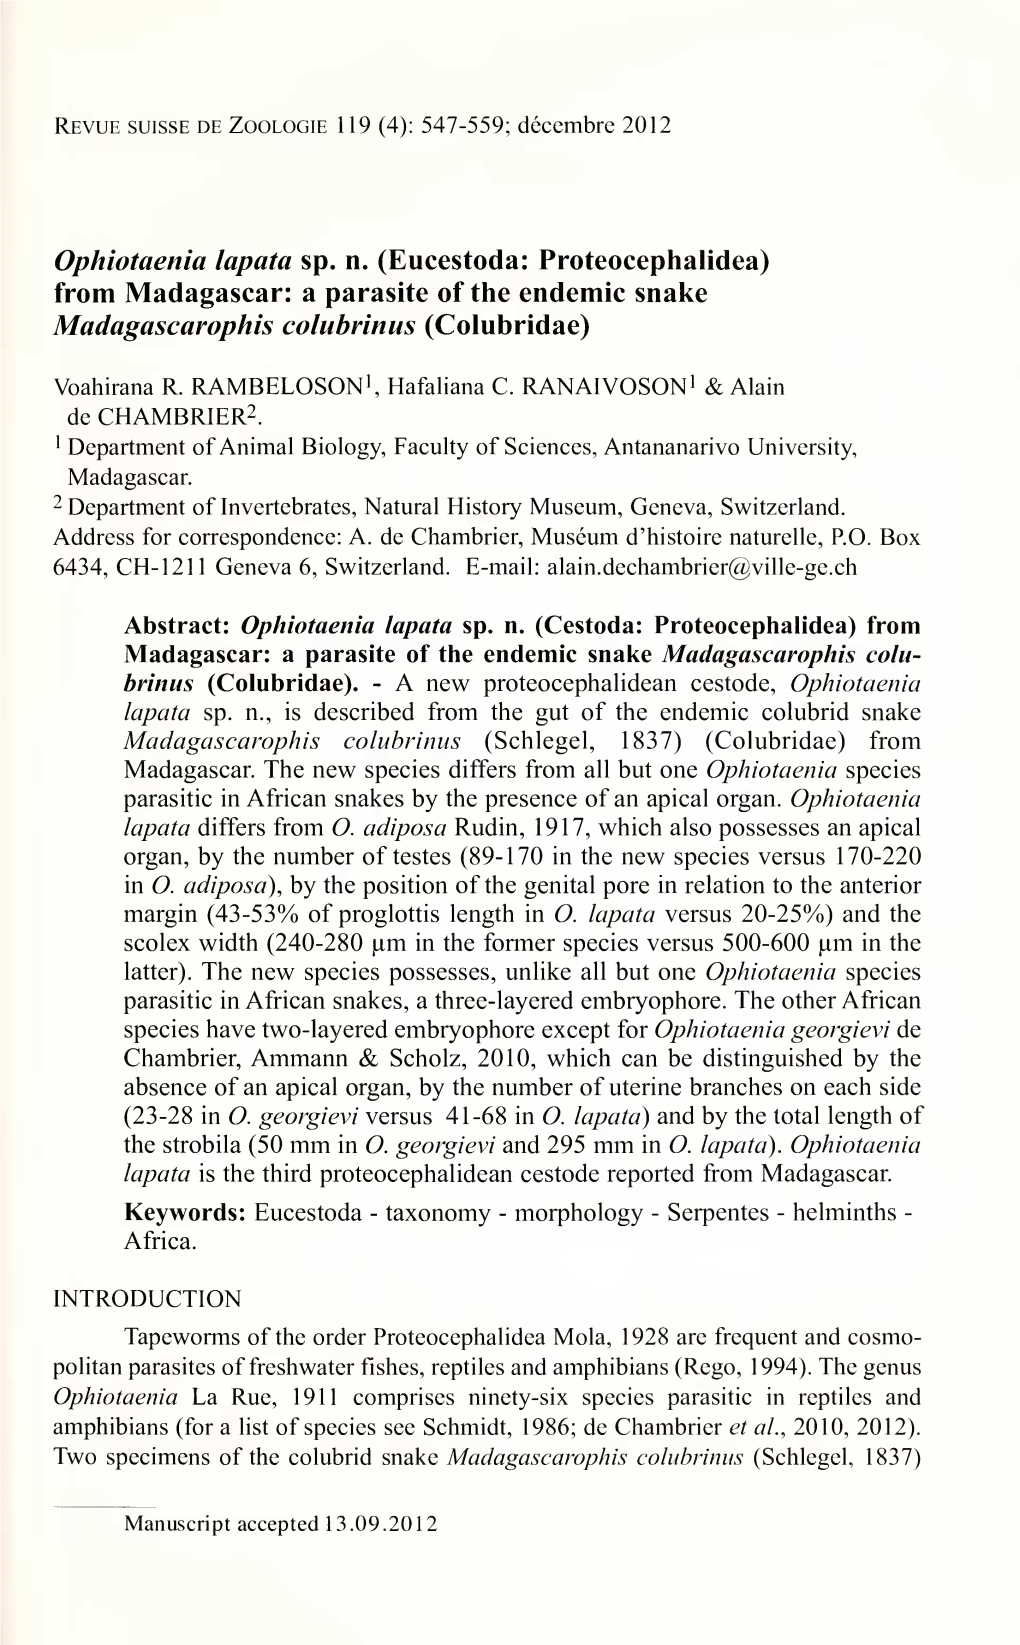 Ophiotaenia Lapata Sp. N. (Eucestoda: Proteocephalidea) from Madagascar: a Parasite of the Endemic Snake Madagascarophis Colubrinus (Colubridae)